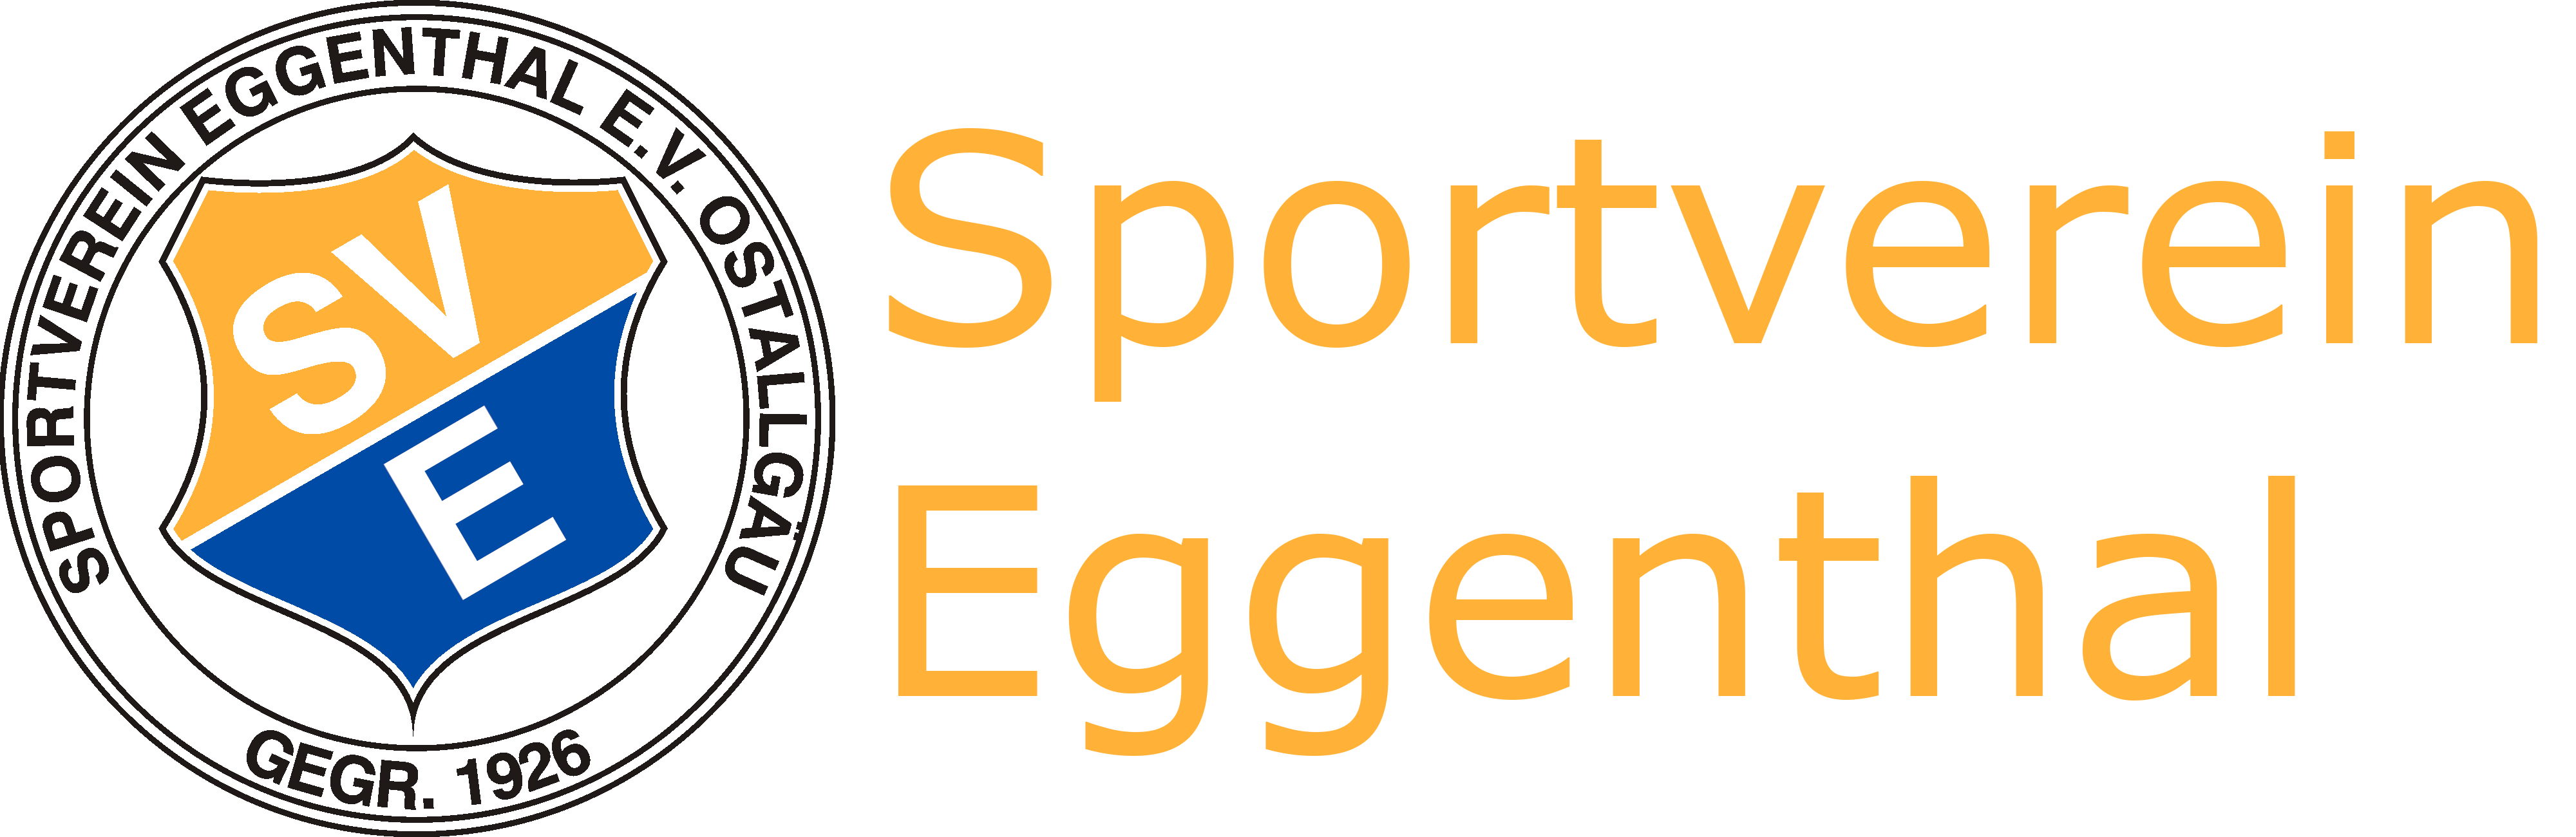 Sportverein Eggenthal logo